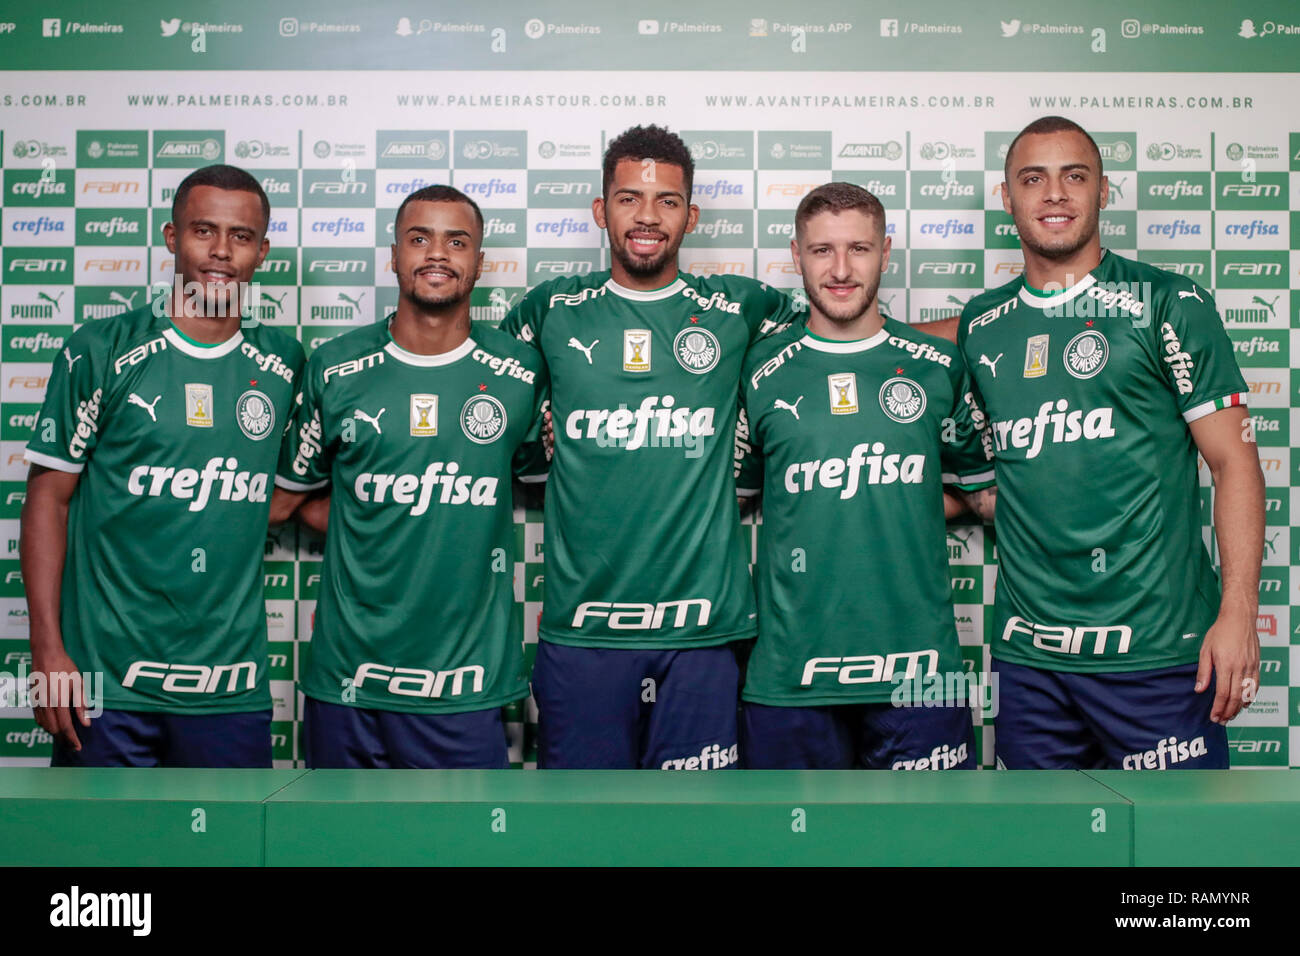 SP - Sao Paulo - 04/01/2019 - Presentation of new players from Palmeiras, right to left Arthur, Ze Rafael, Mateus Fernandes Felipe Pires and Carlos Eduardo. Photo: Marcello Zambrana / AGIF Stock Photo